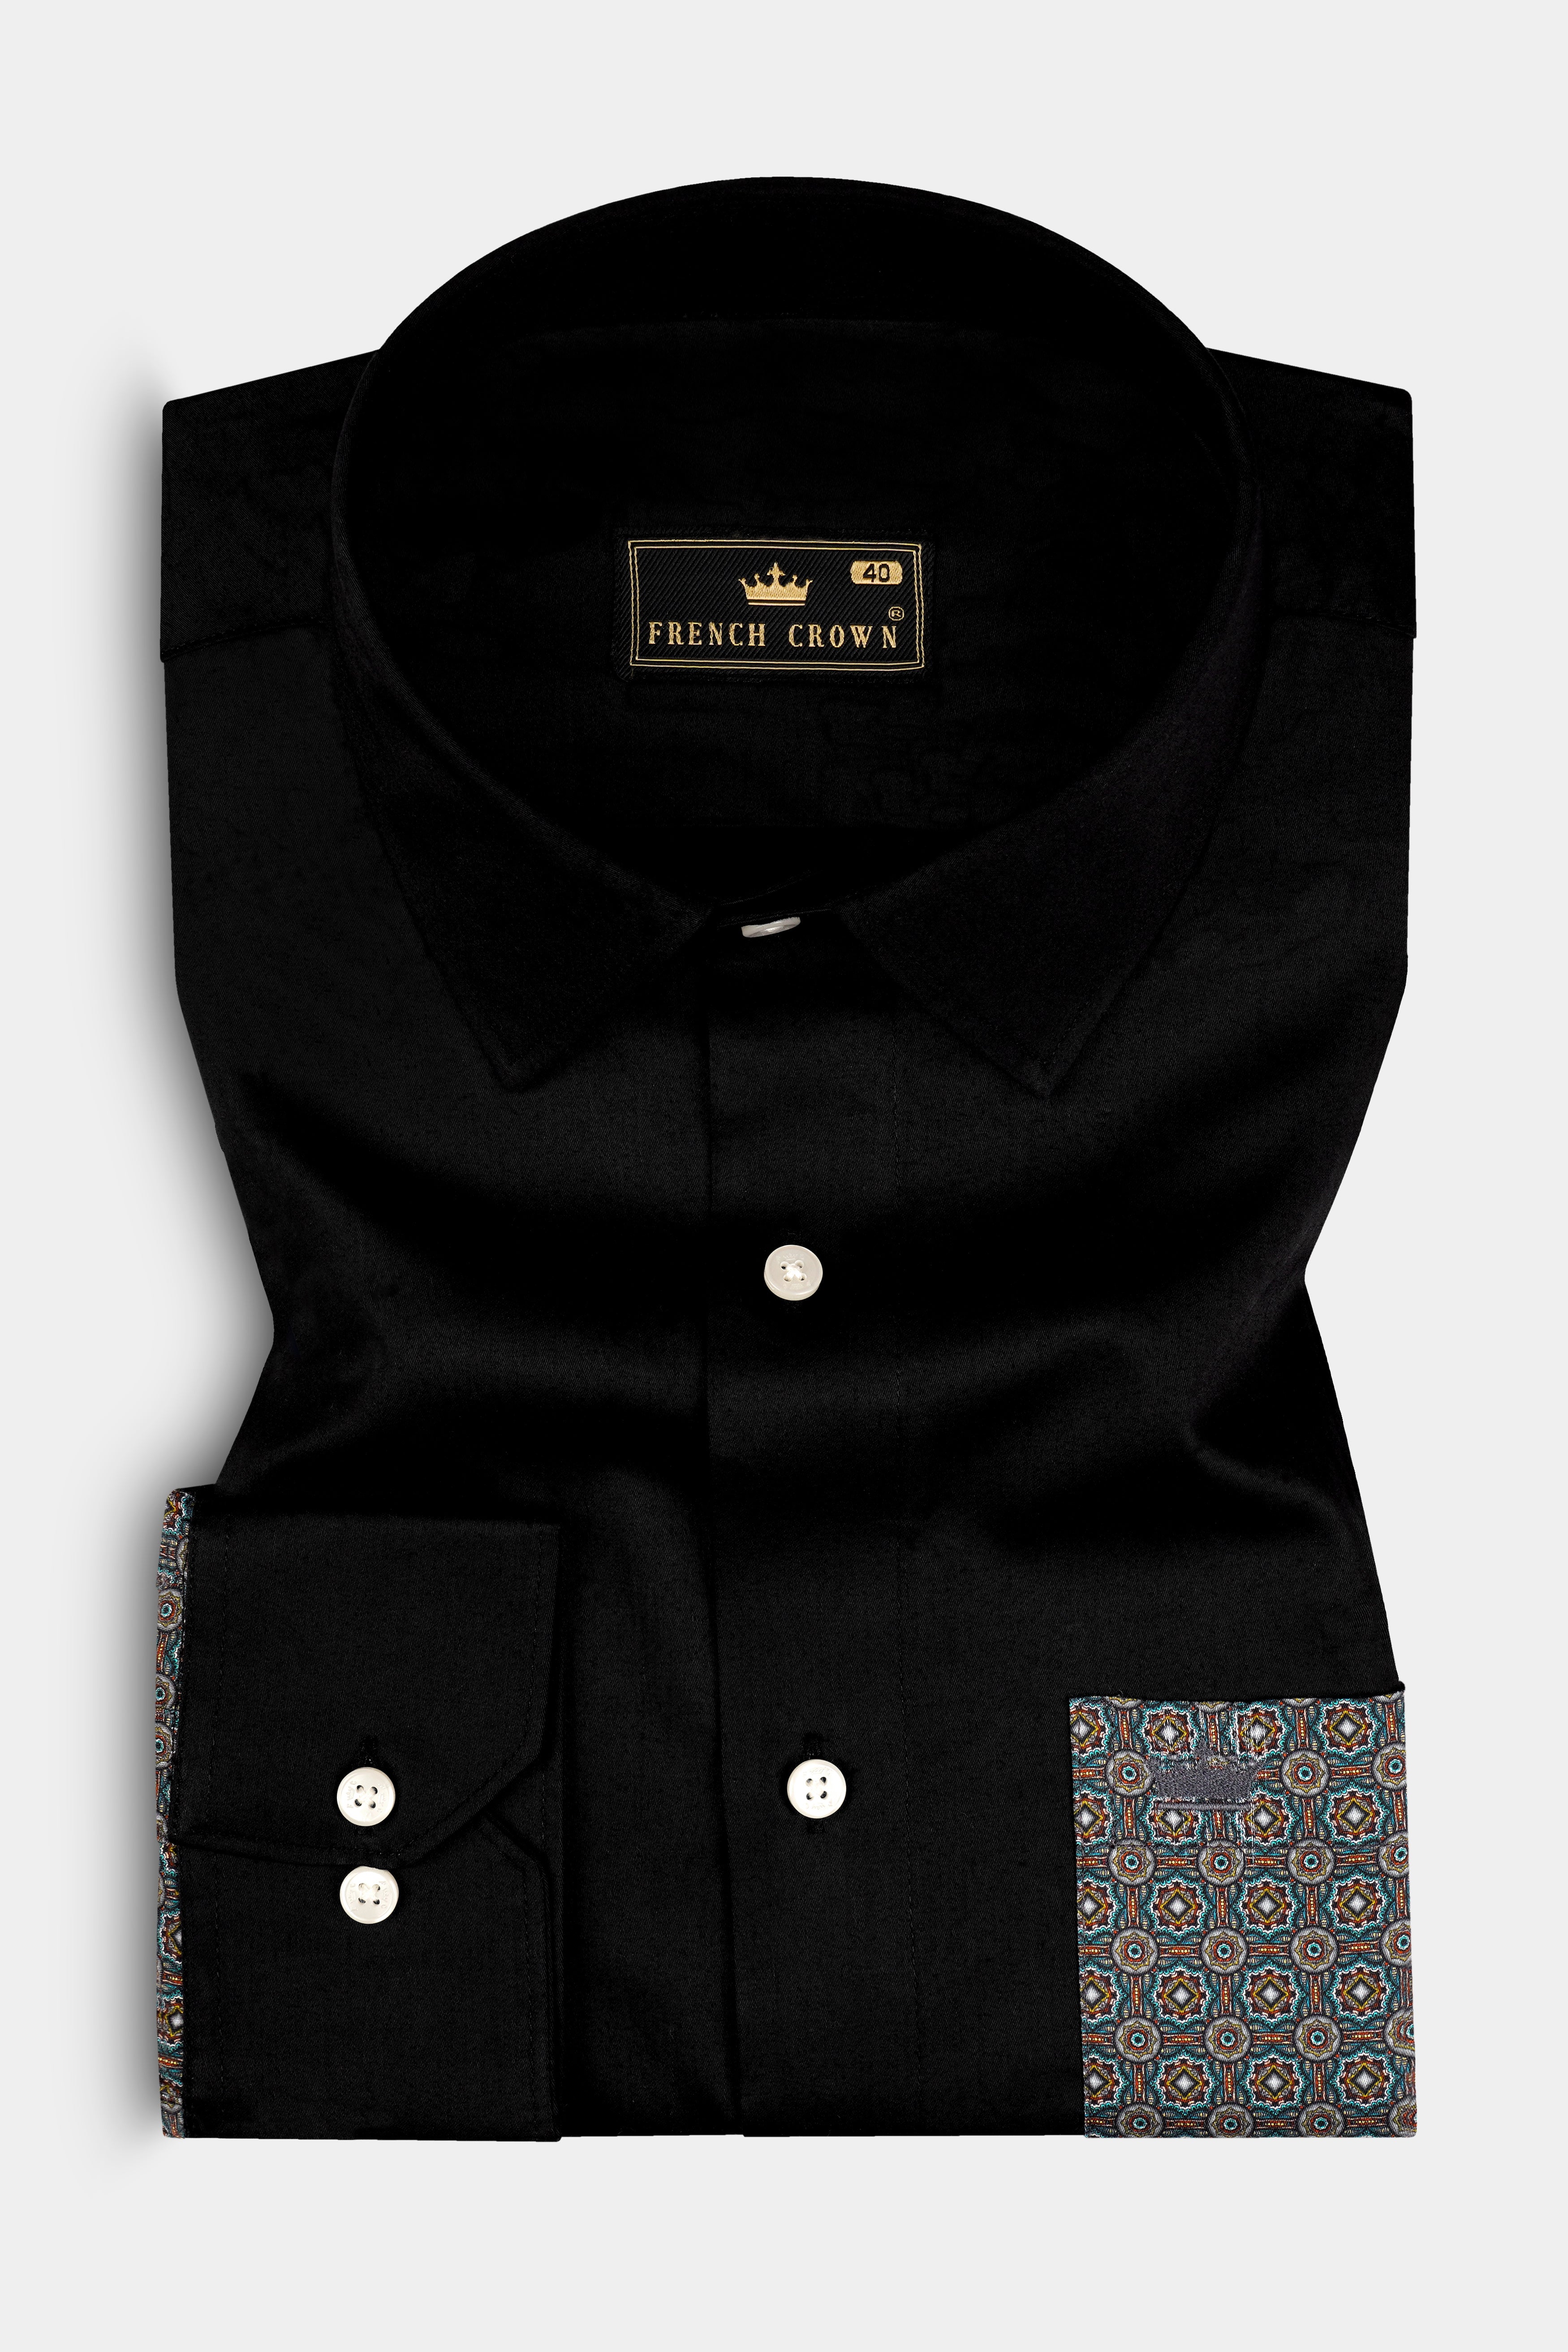 Vulcan Black Super Soft Premium Cotton Designer Shirt